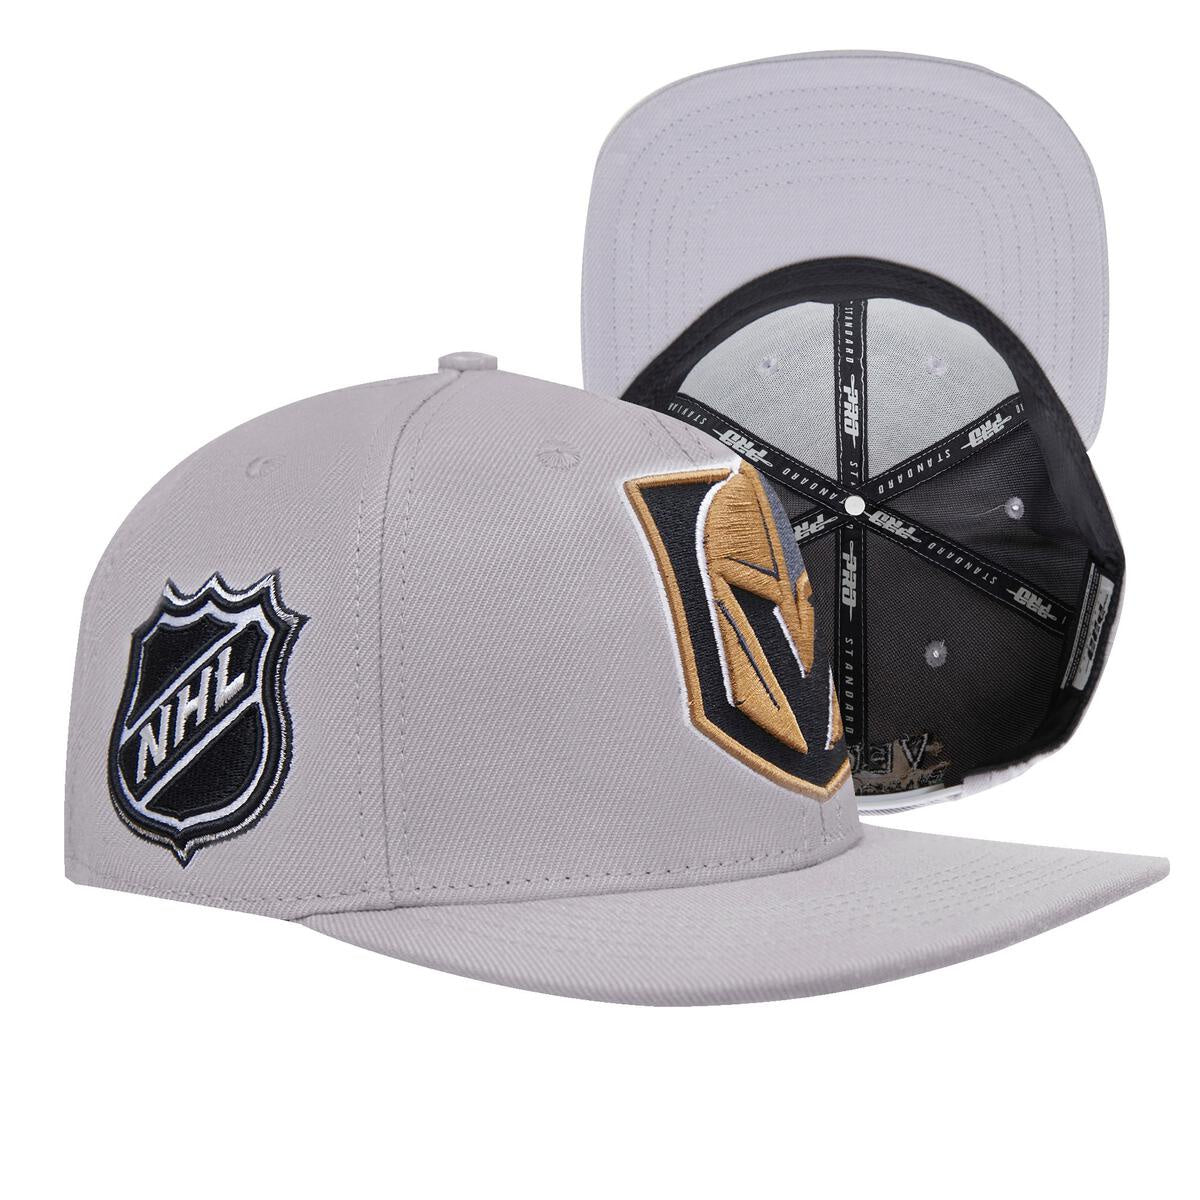 Las Vegas Golden Knight Hat Cap 